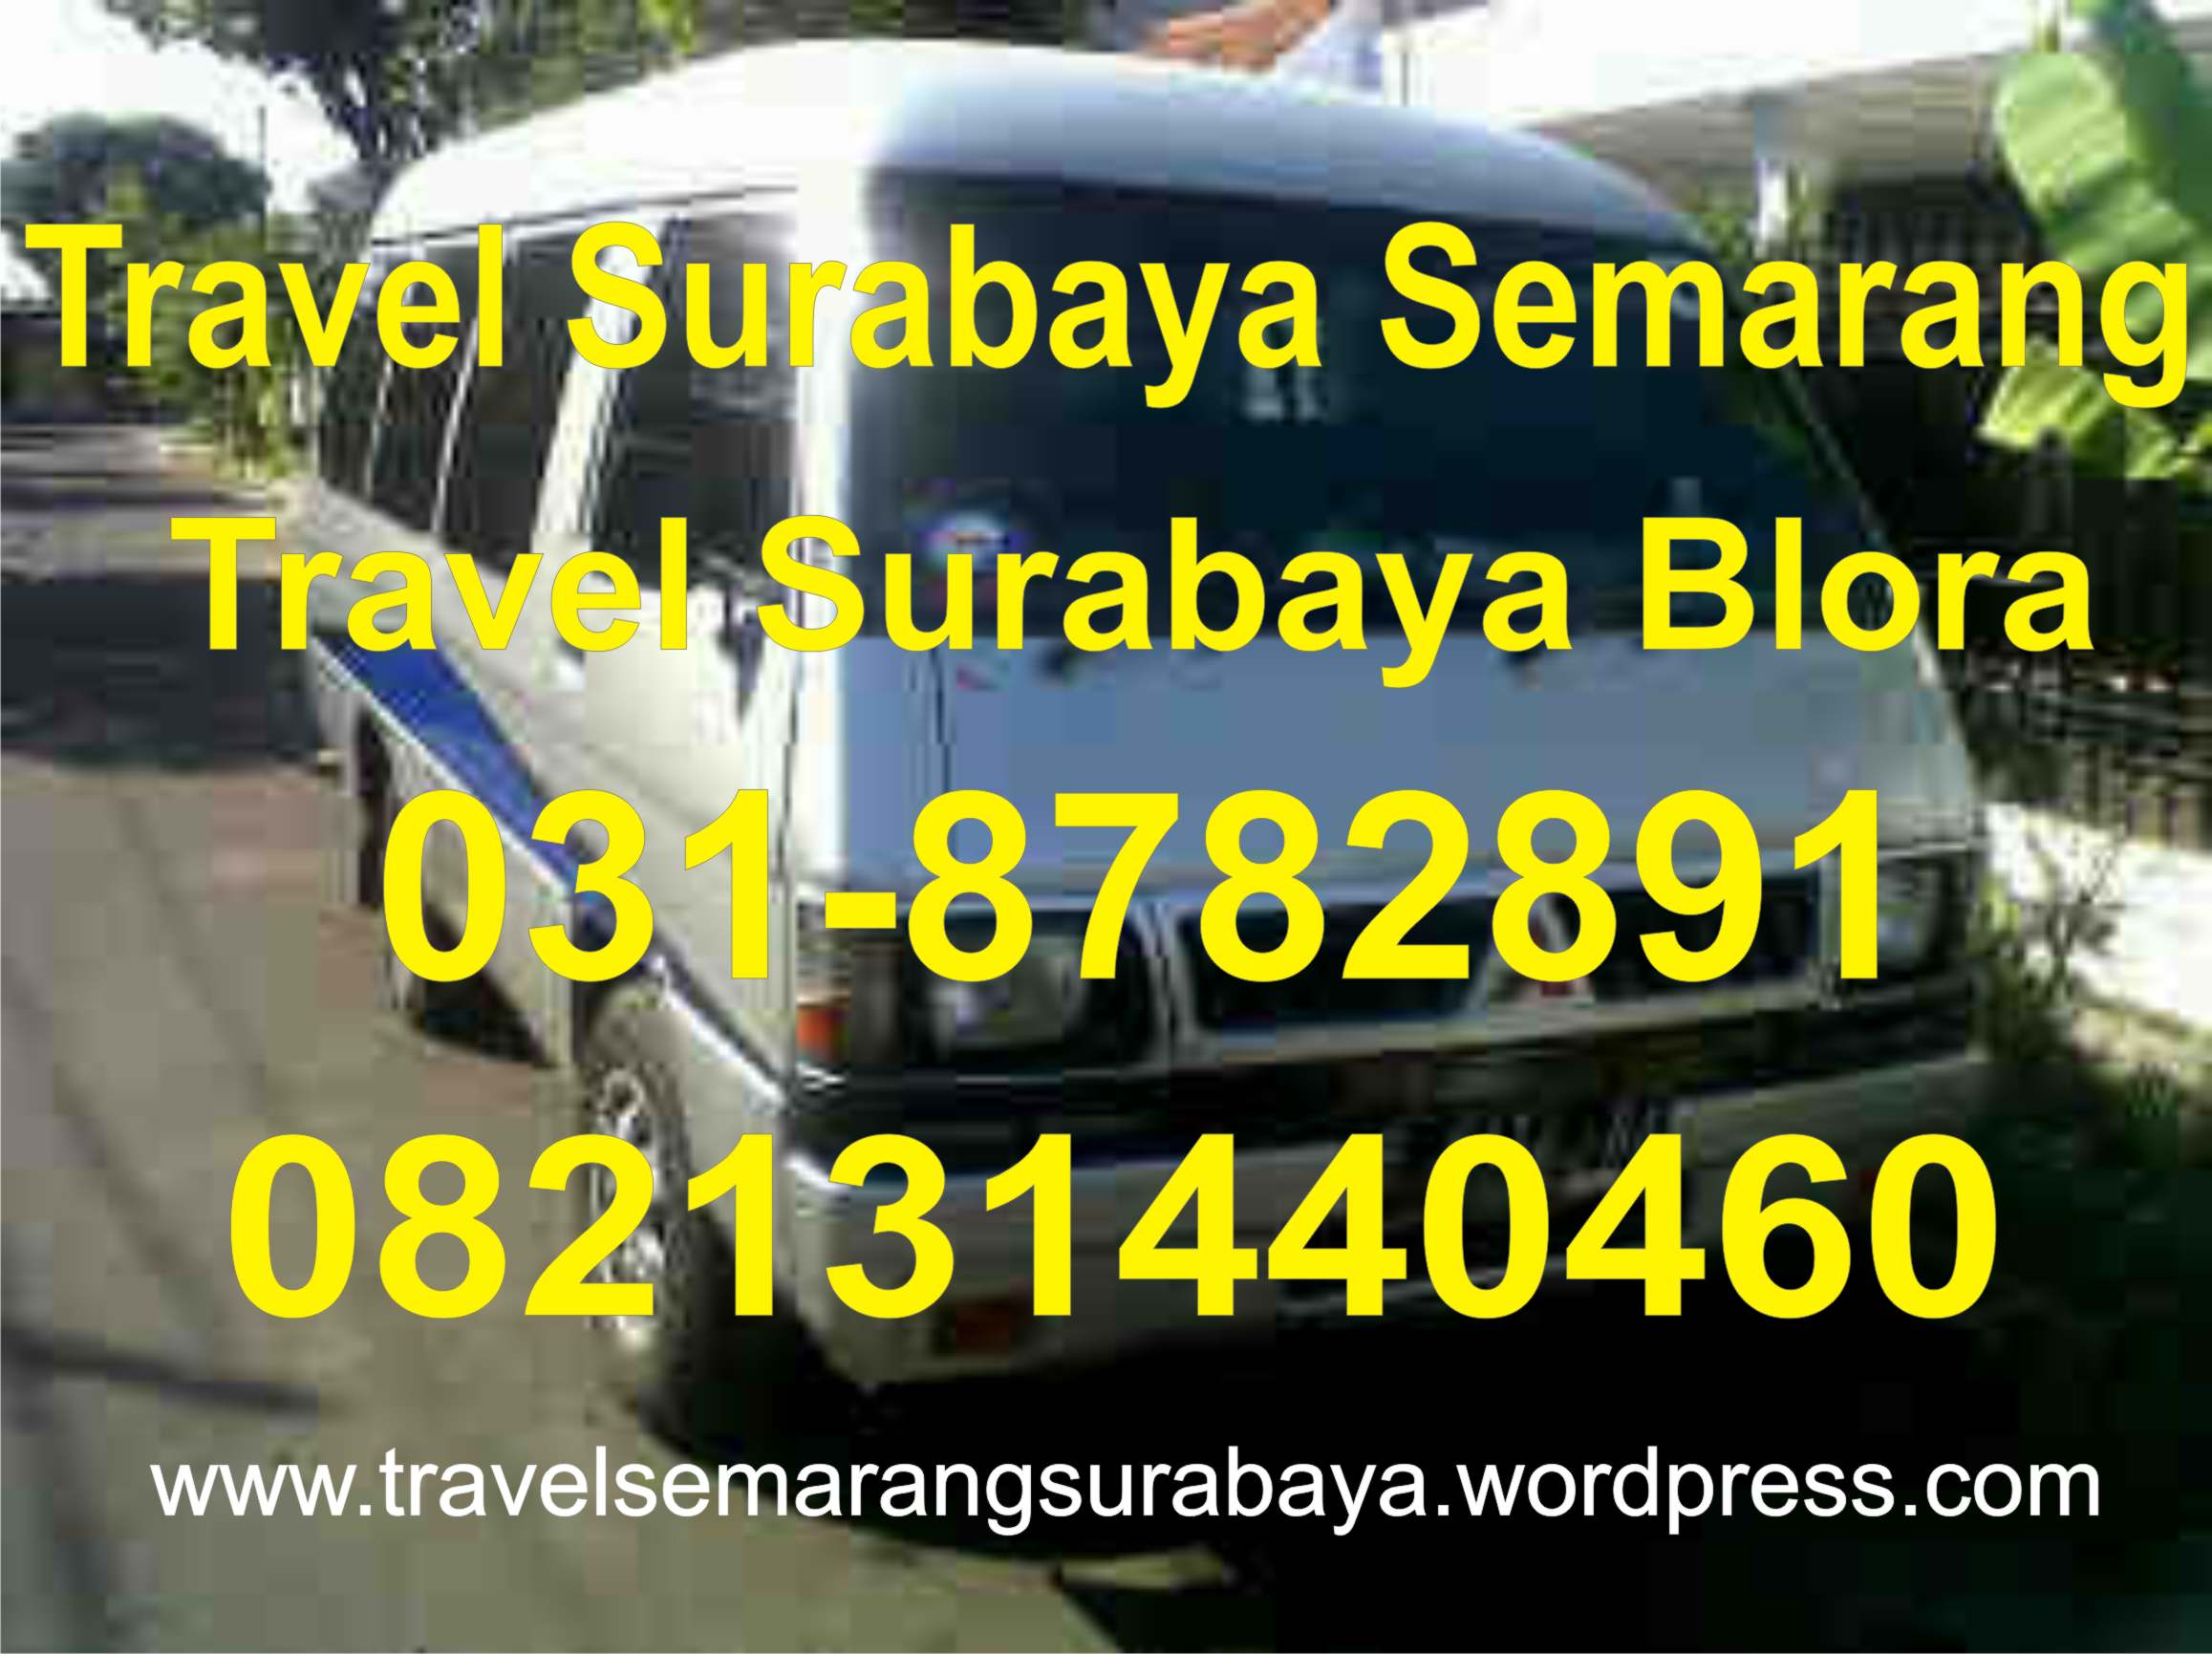 nusantara tour and travel semarang surabaya